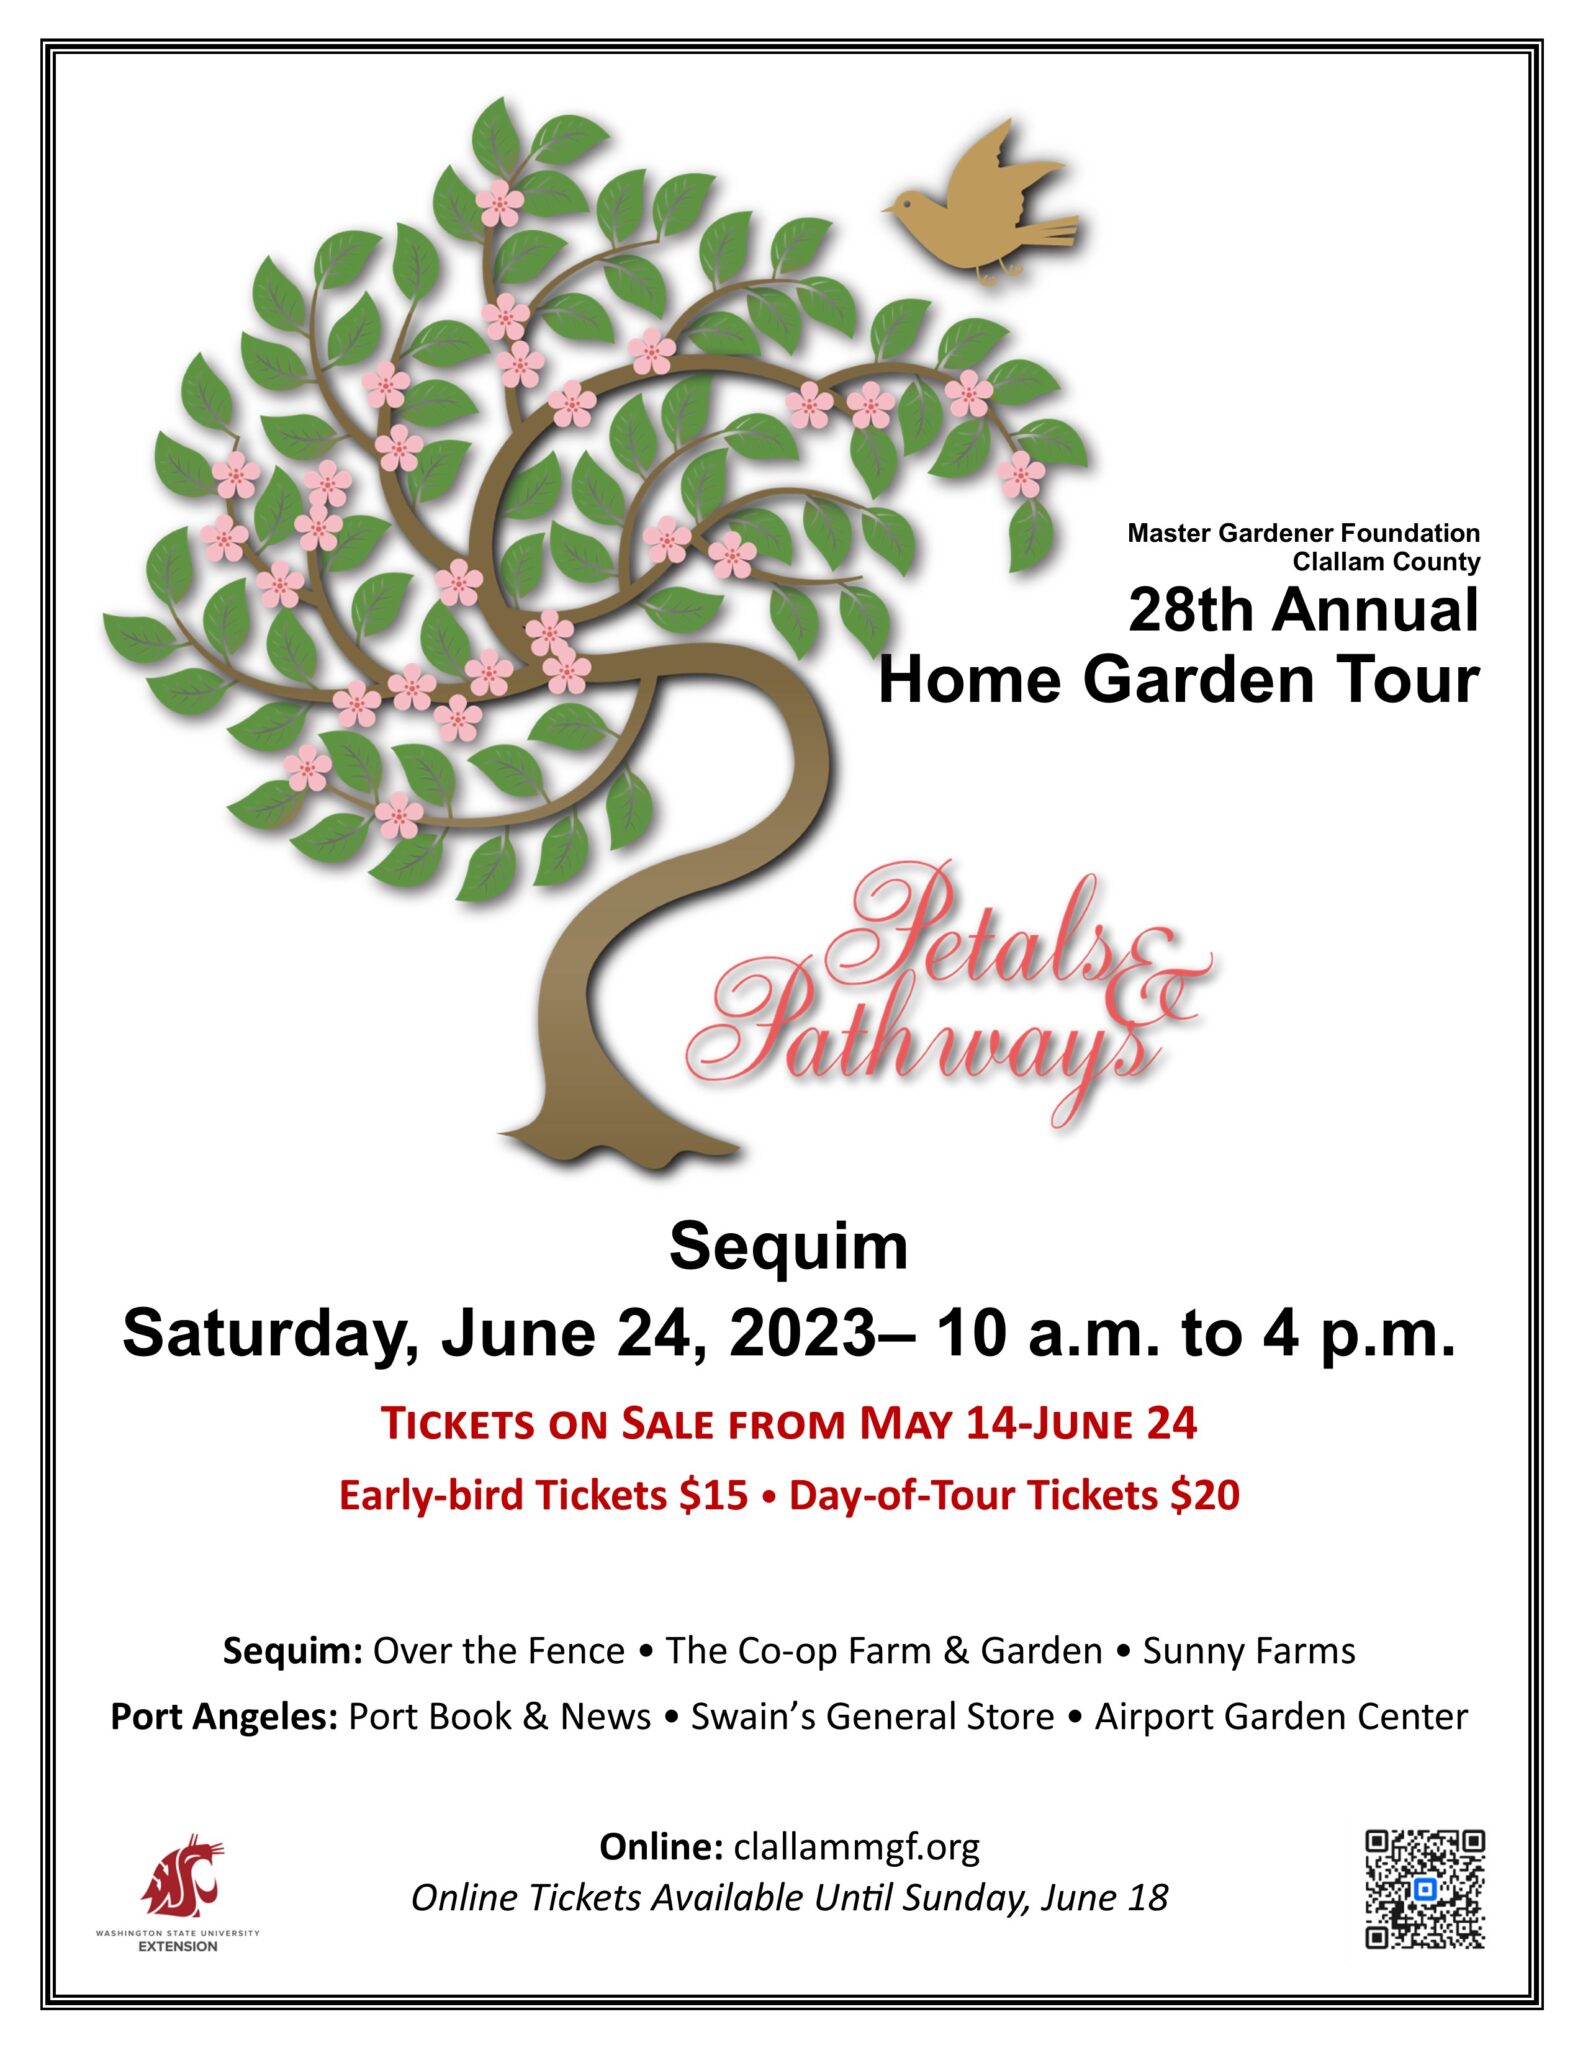 Petals & Pathways Garden Tour Clallam County Master Gardener Foundation